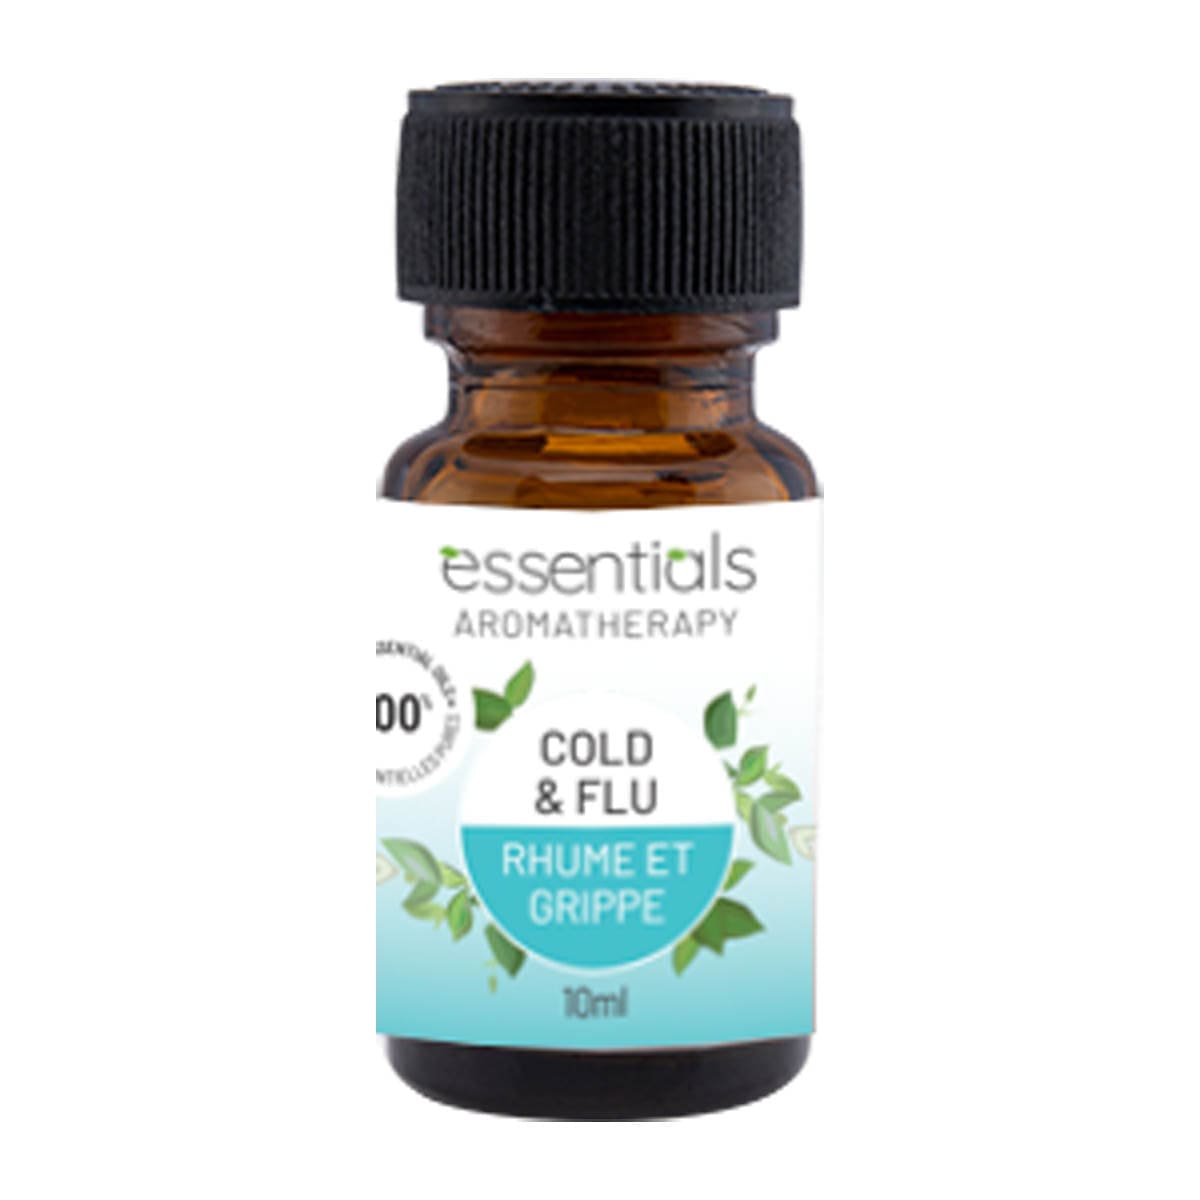 Essential Oil Blends 10 ml Bottles Cold and flu